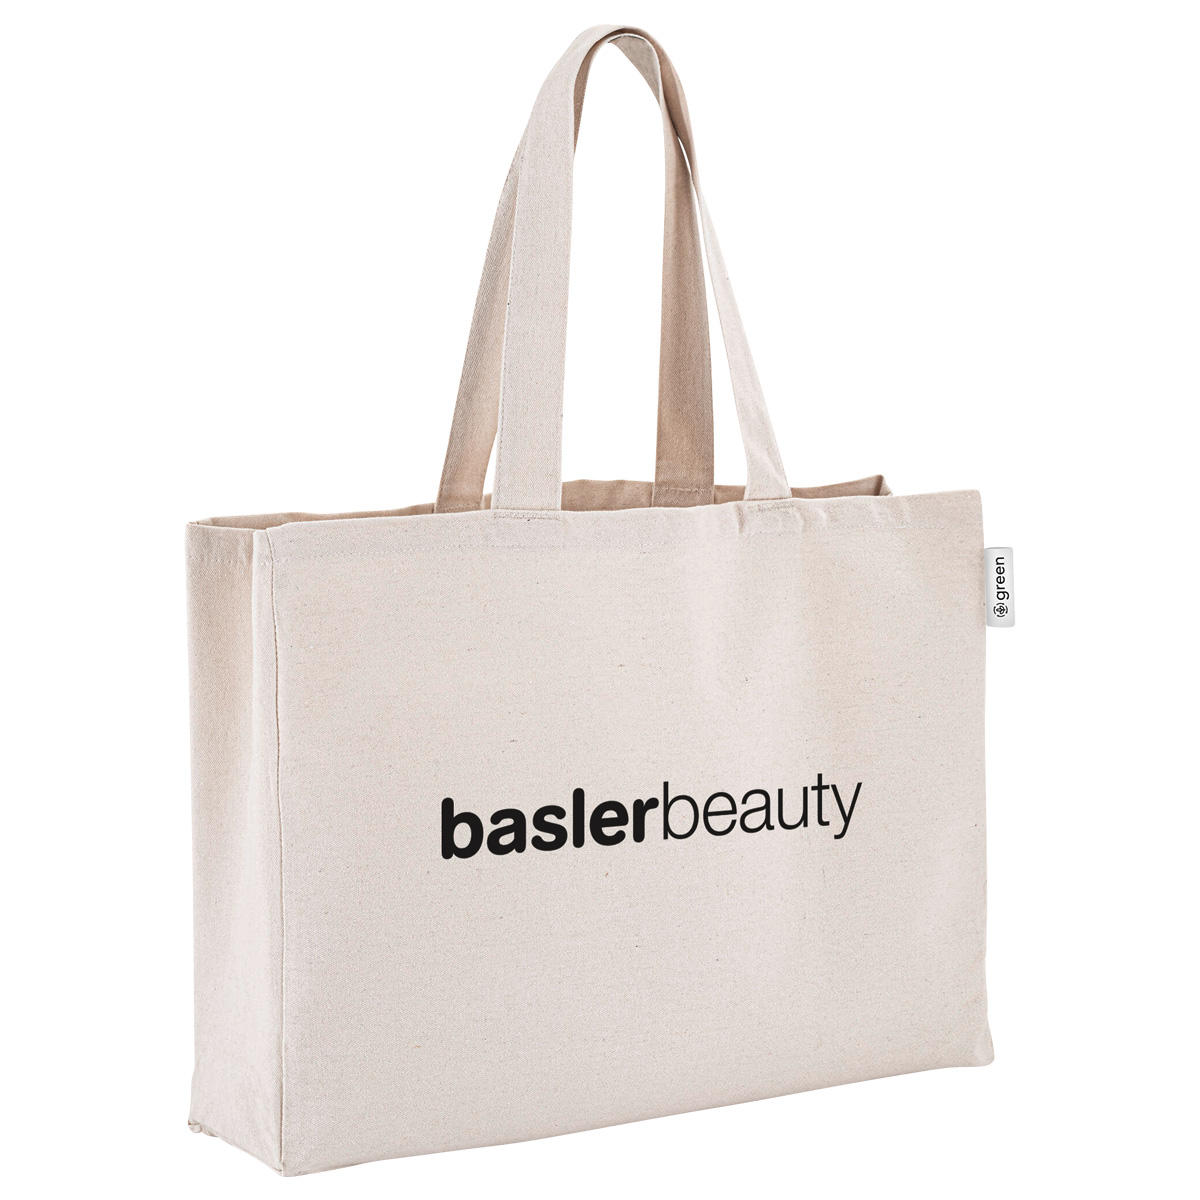 baslerbeauty Beach bag & shopper be yourself  - 1